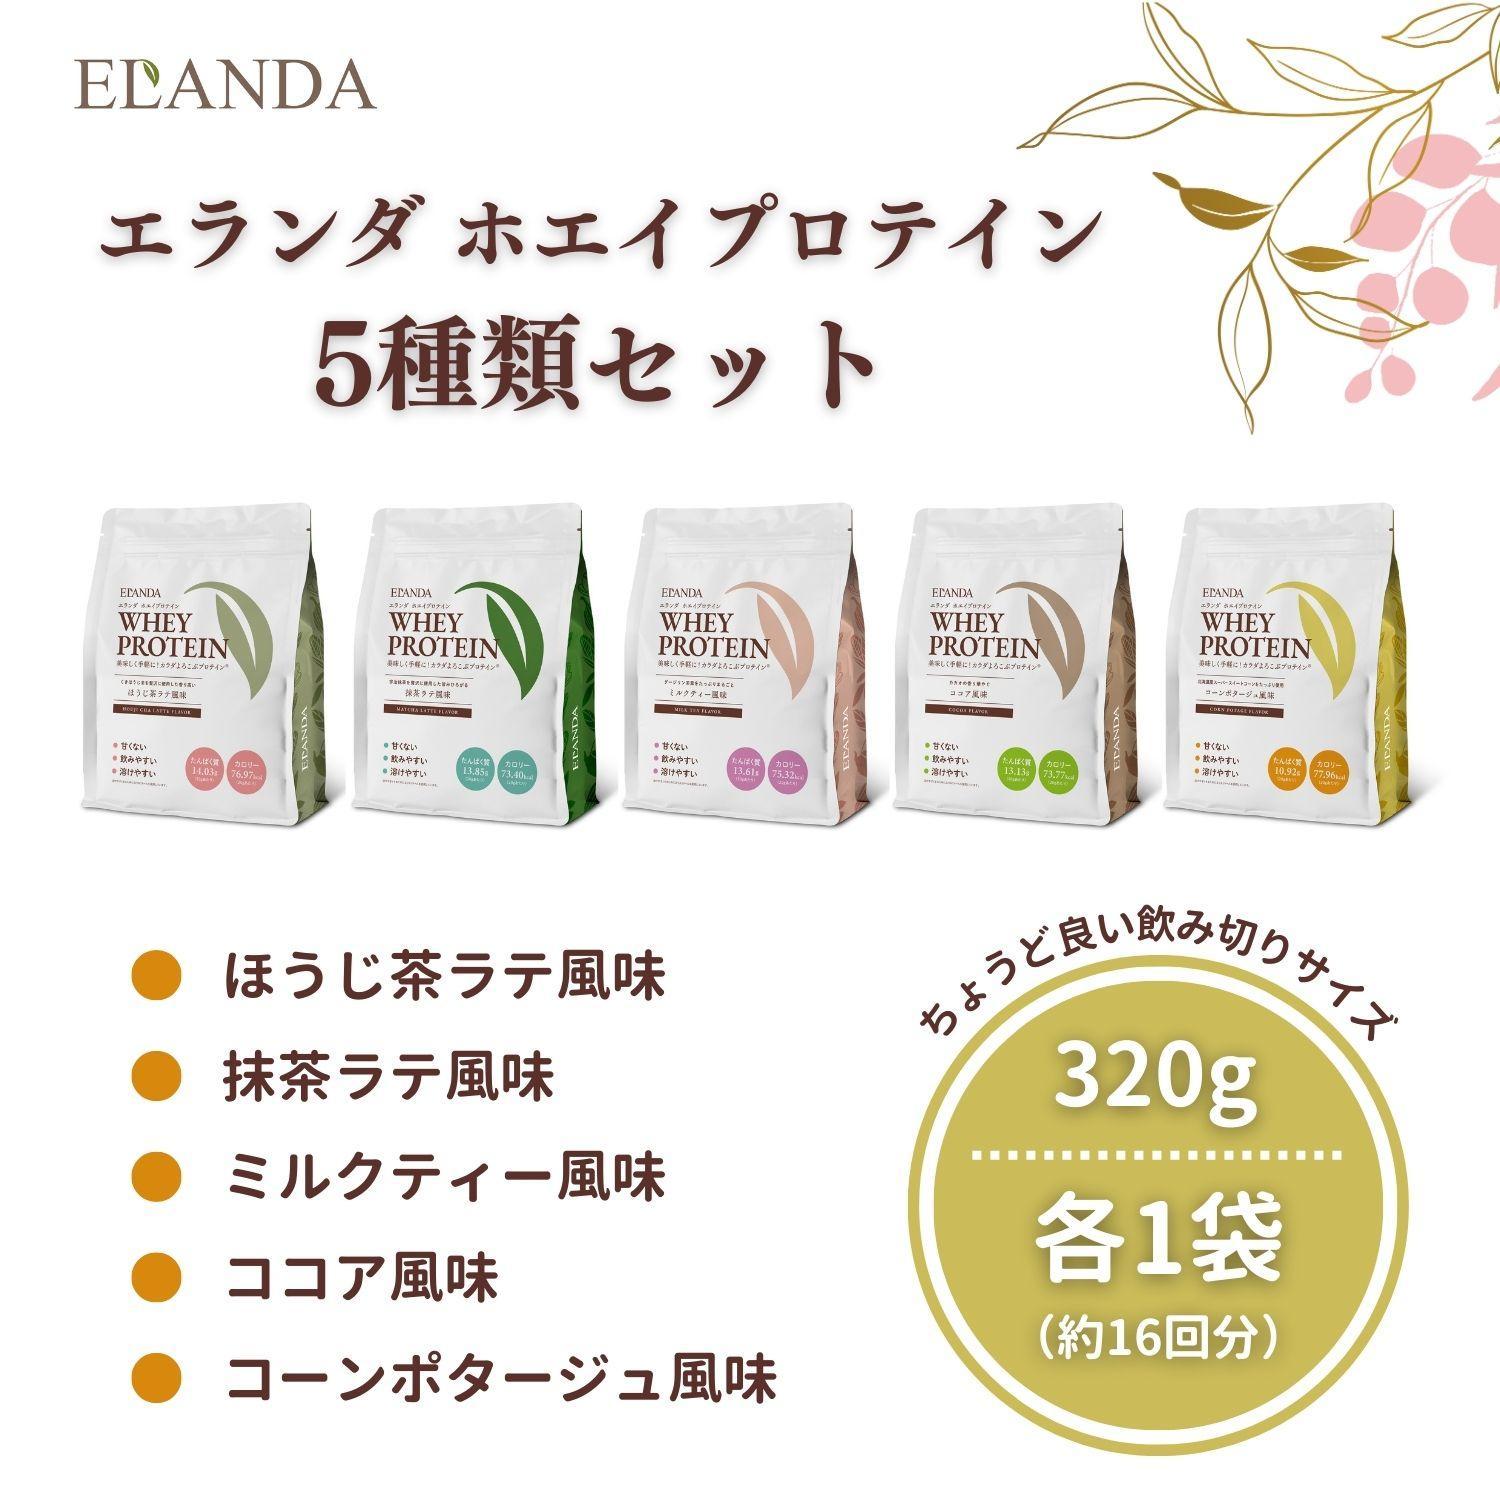 ELANDA【エランダ ホエイプロテイン】5種類セット 320g×各1袋